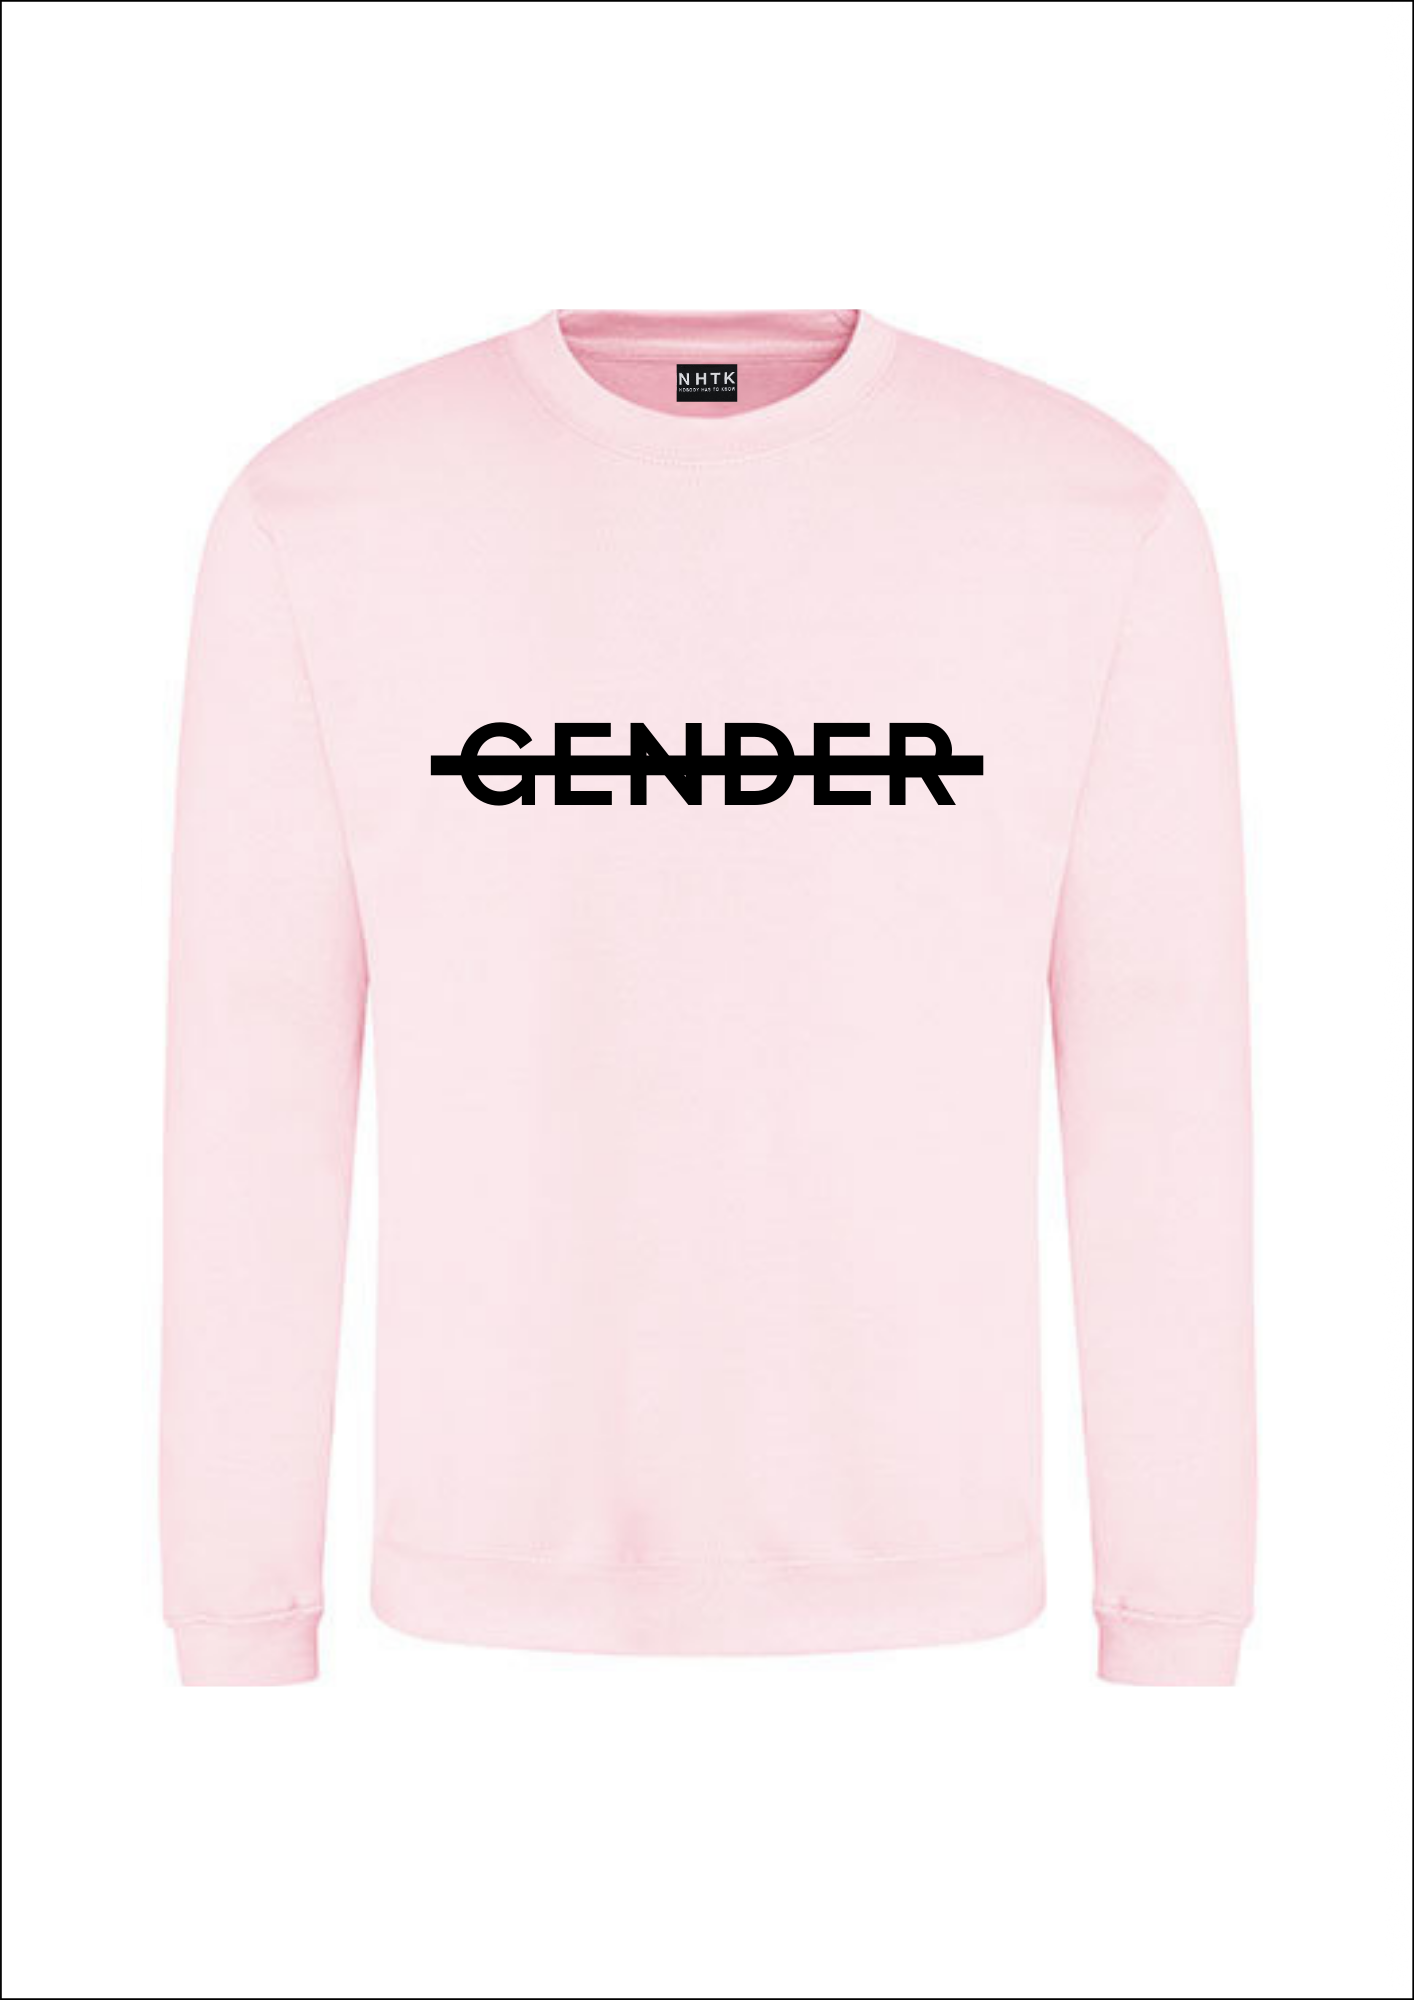 No gender sweater - ash